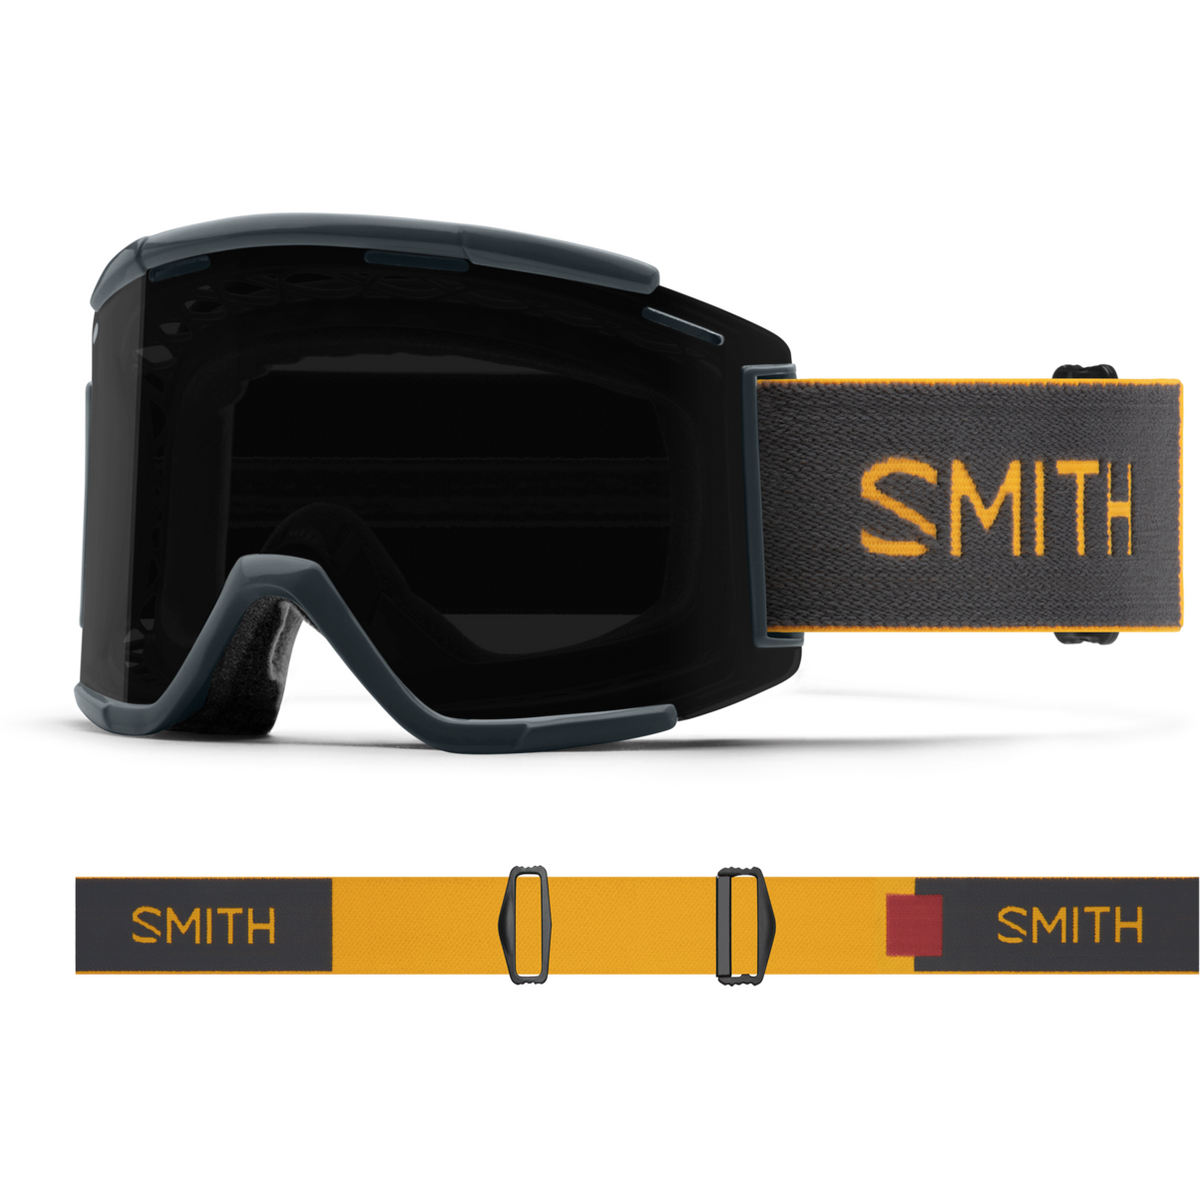 Smith Optics Squad XL MTB Goggles